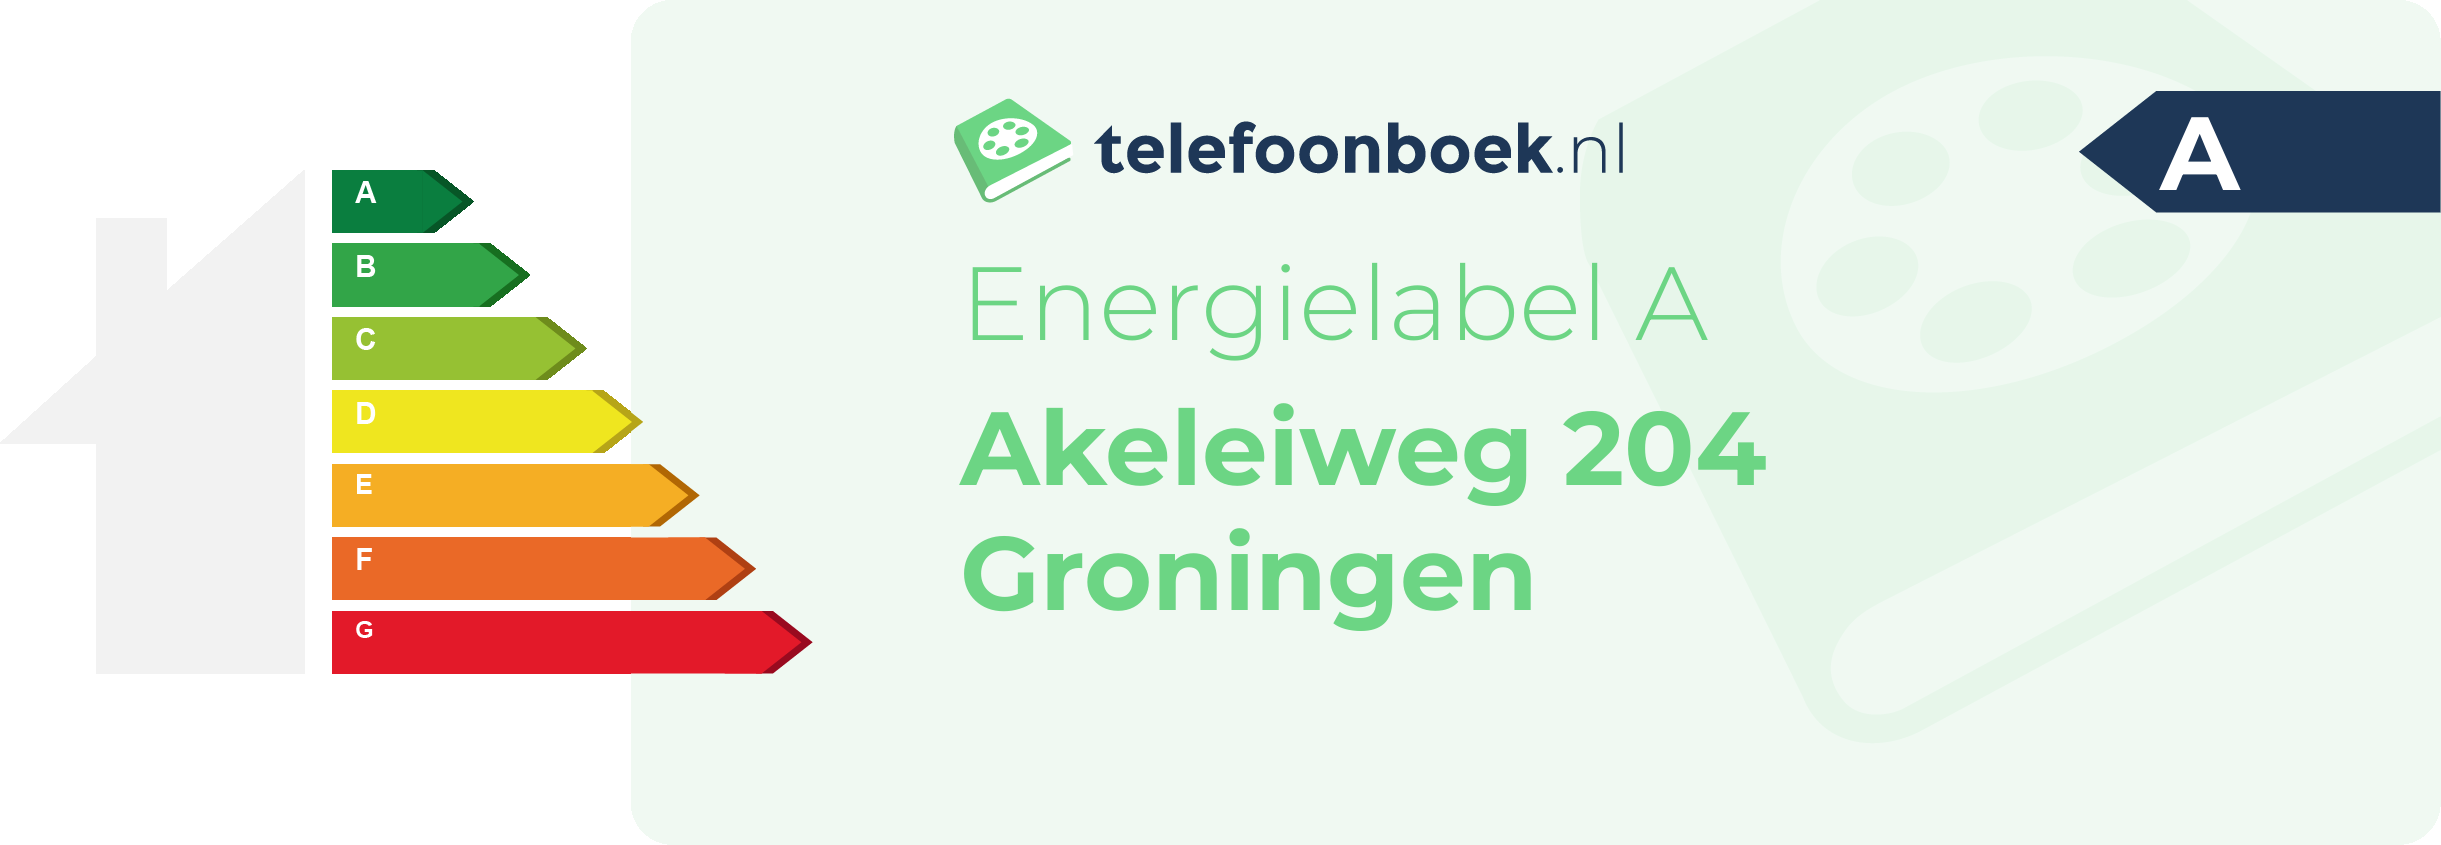 Energielabel Akeleiweg 204 Groningen